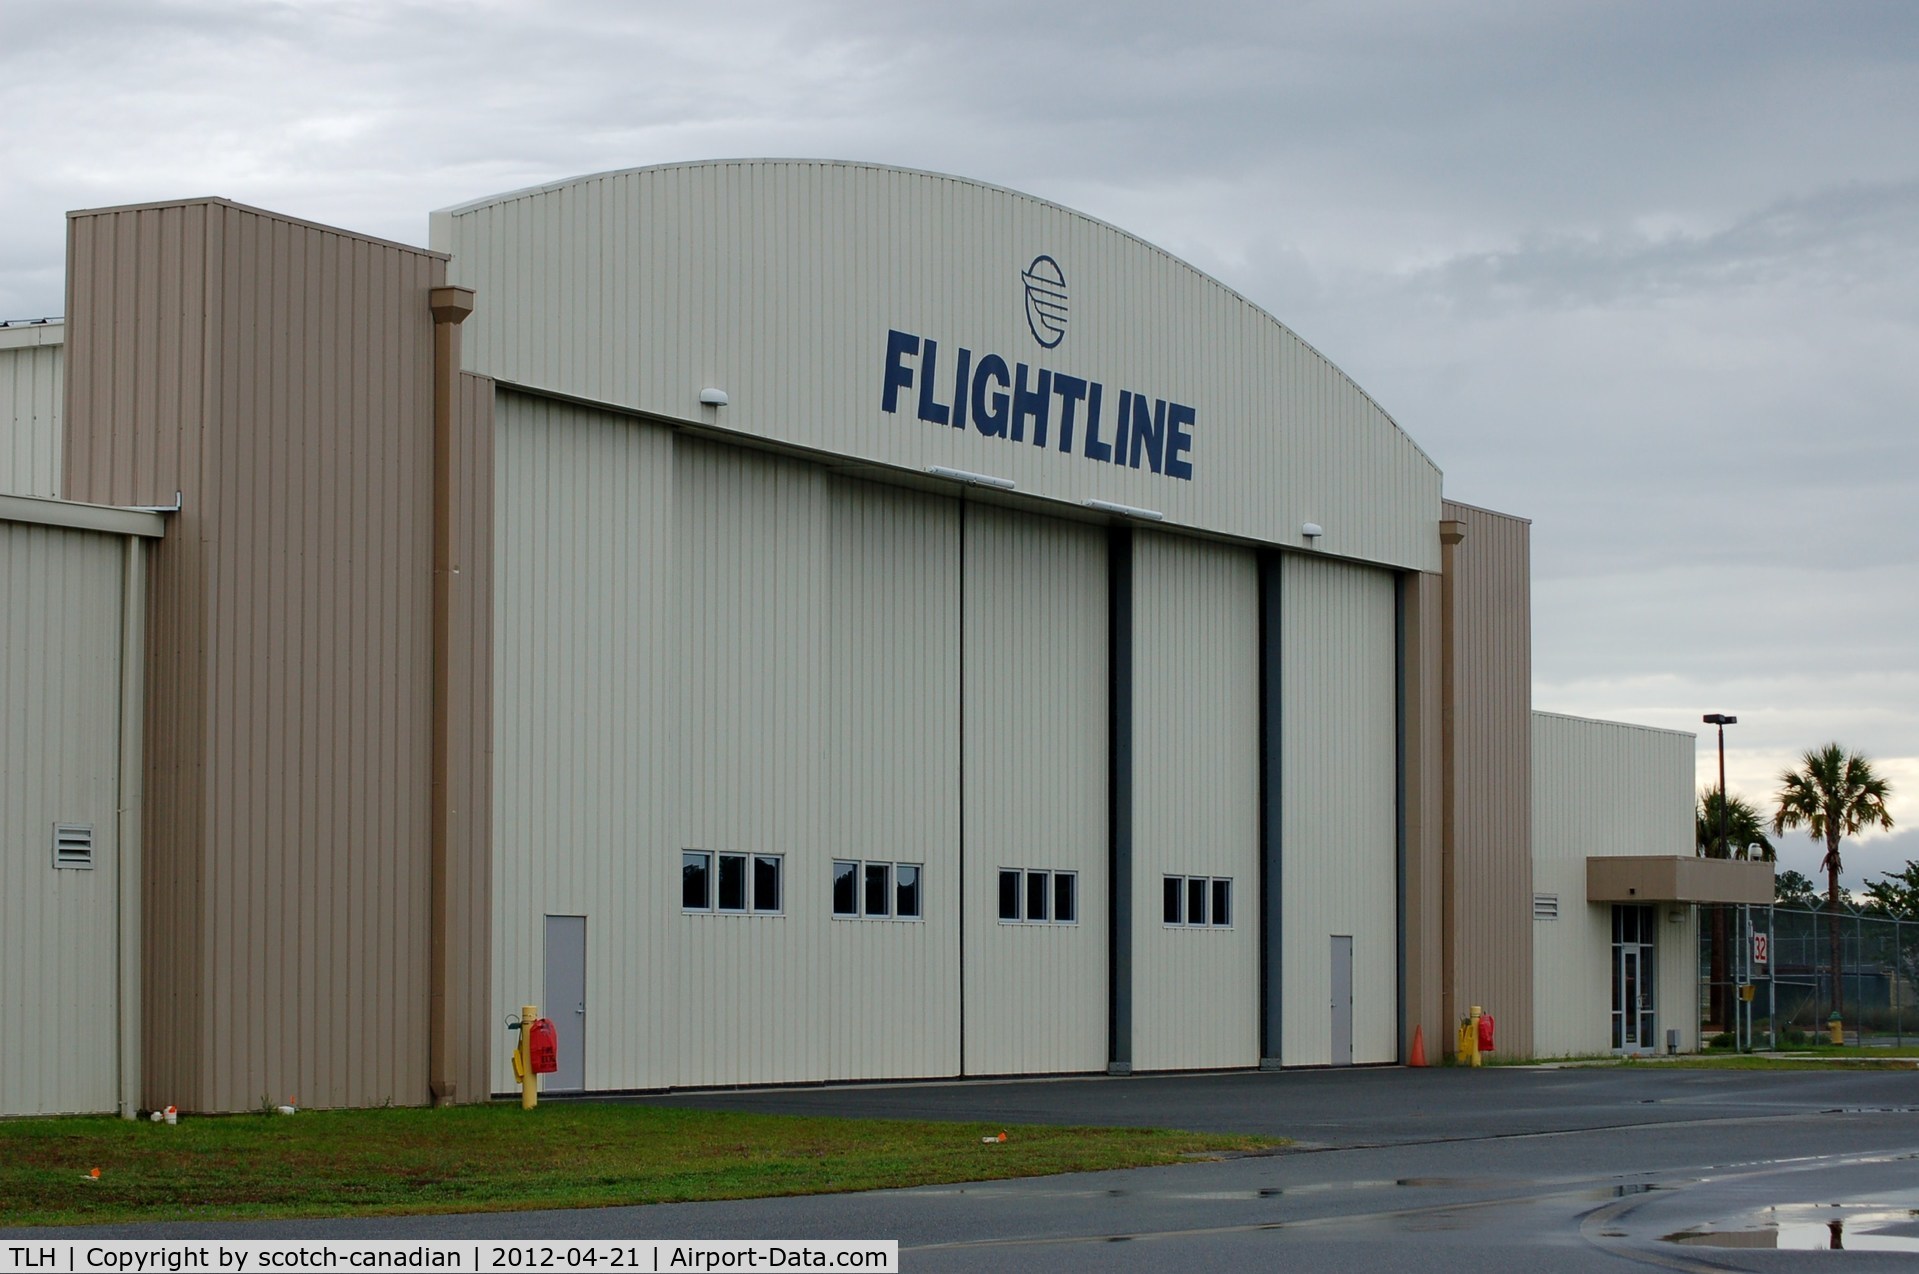 Tallahassee Regional Airport (TLH) - Flightline Hangar at Tallahassee Regional Airport, Tallahassee, FL 